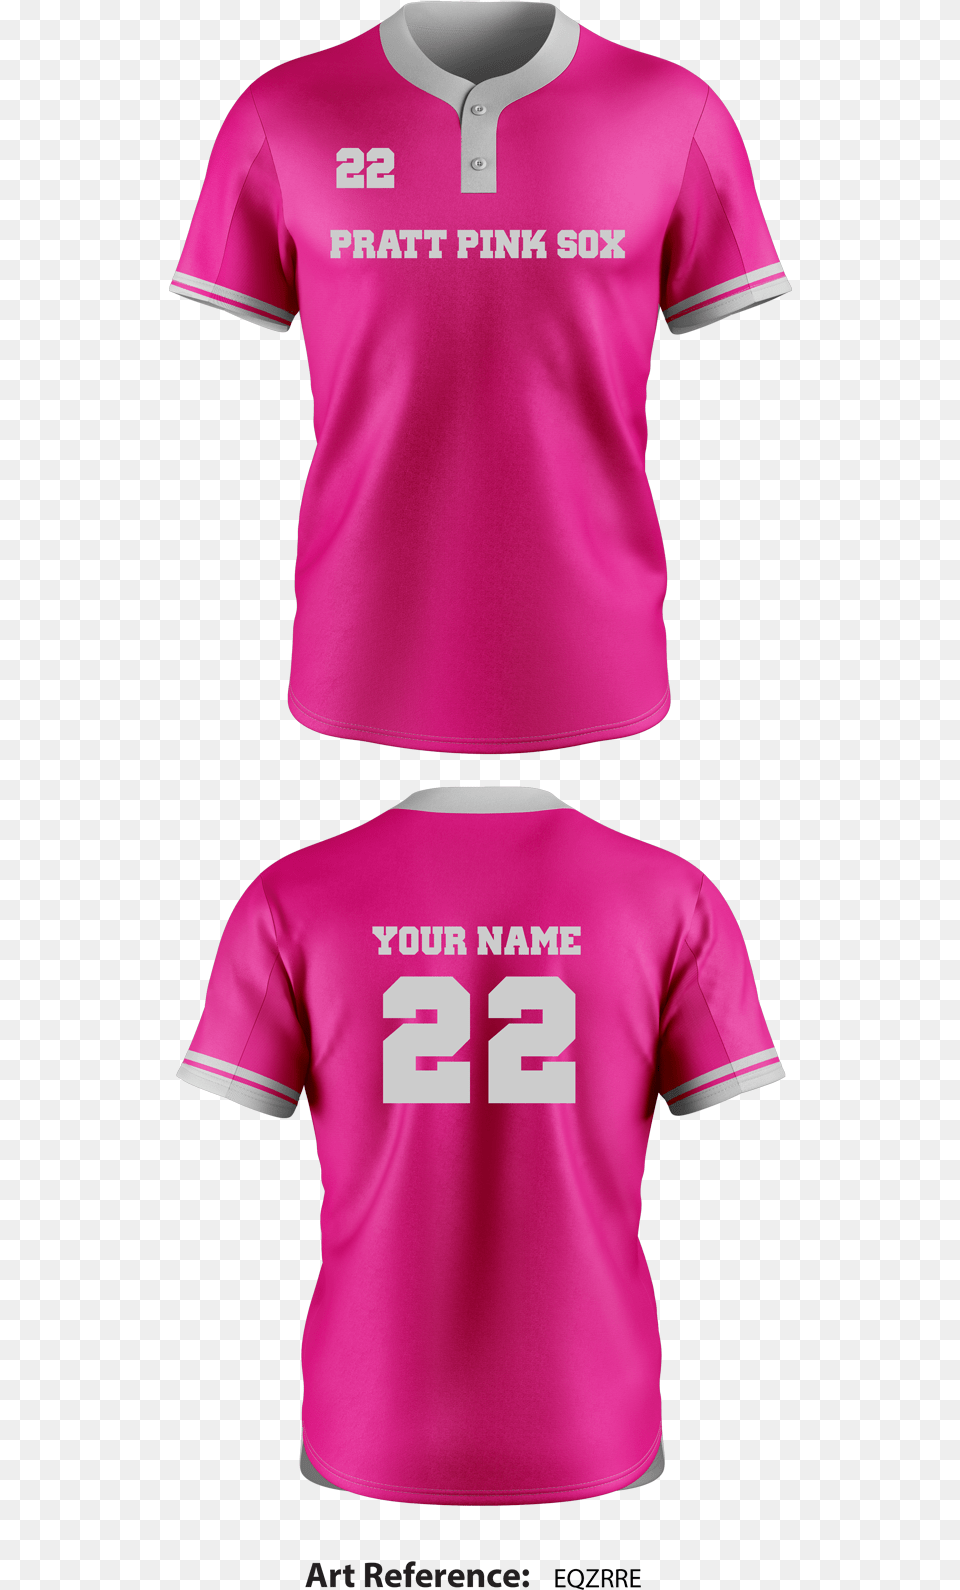 Pratt Pink Sox Two Button Softball Jersey Active Shirt, Clothing, T-shirt Free Png Download